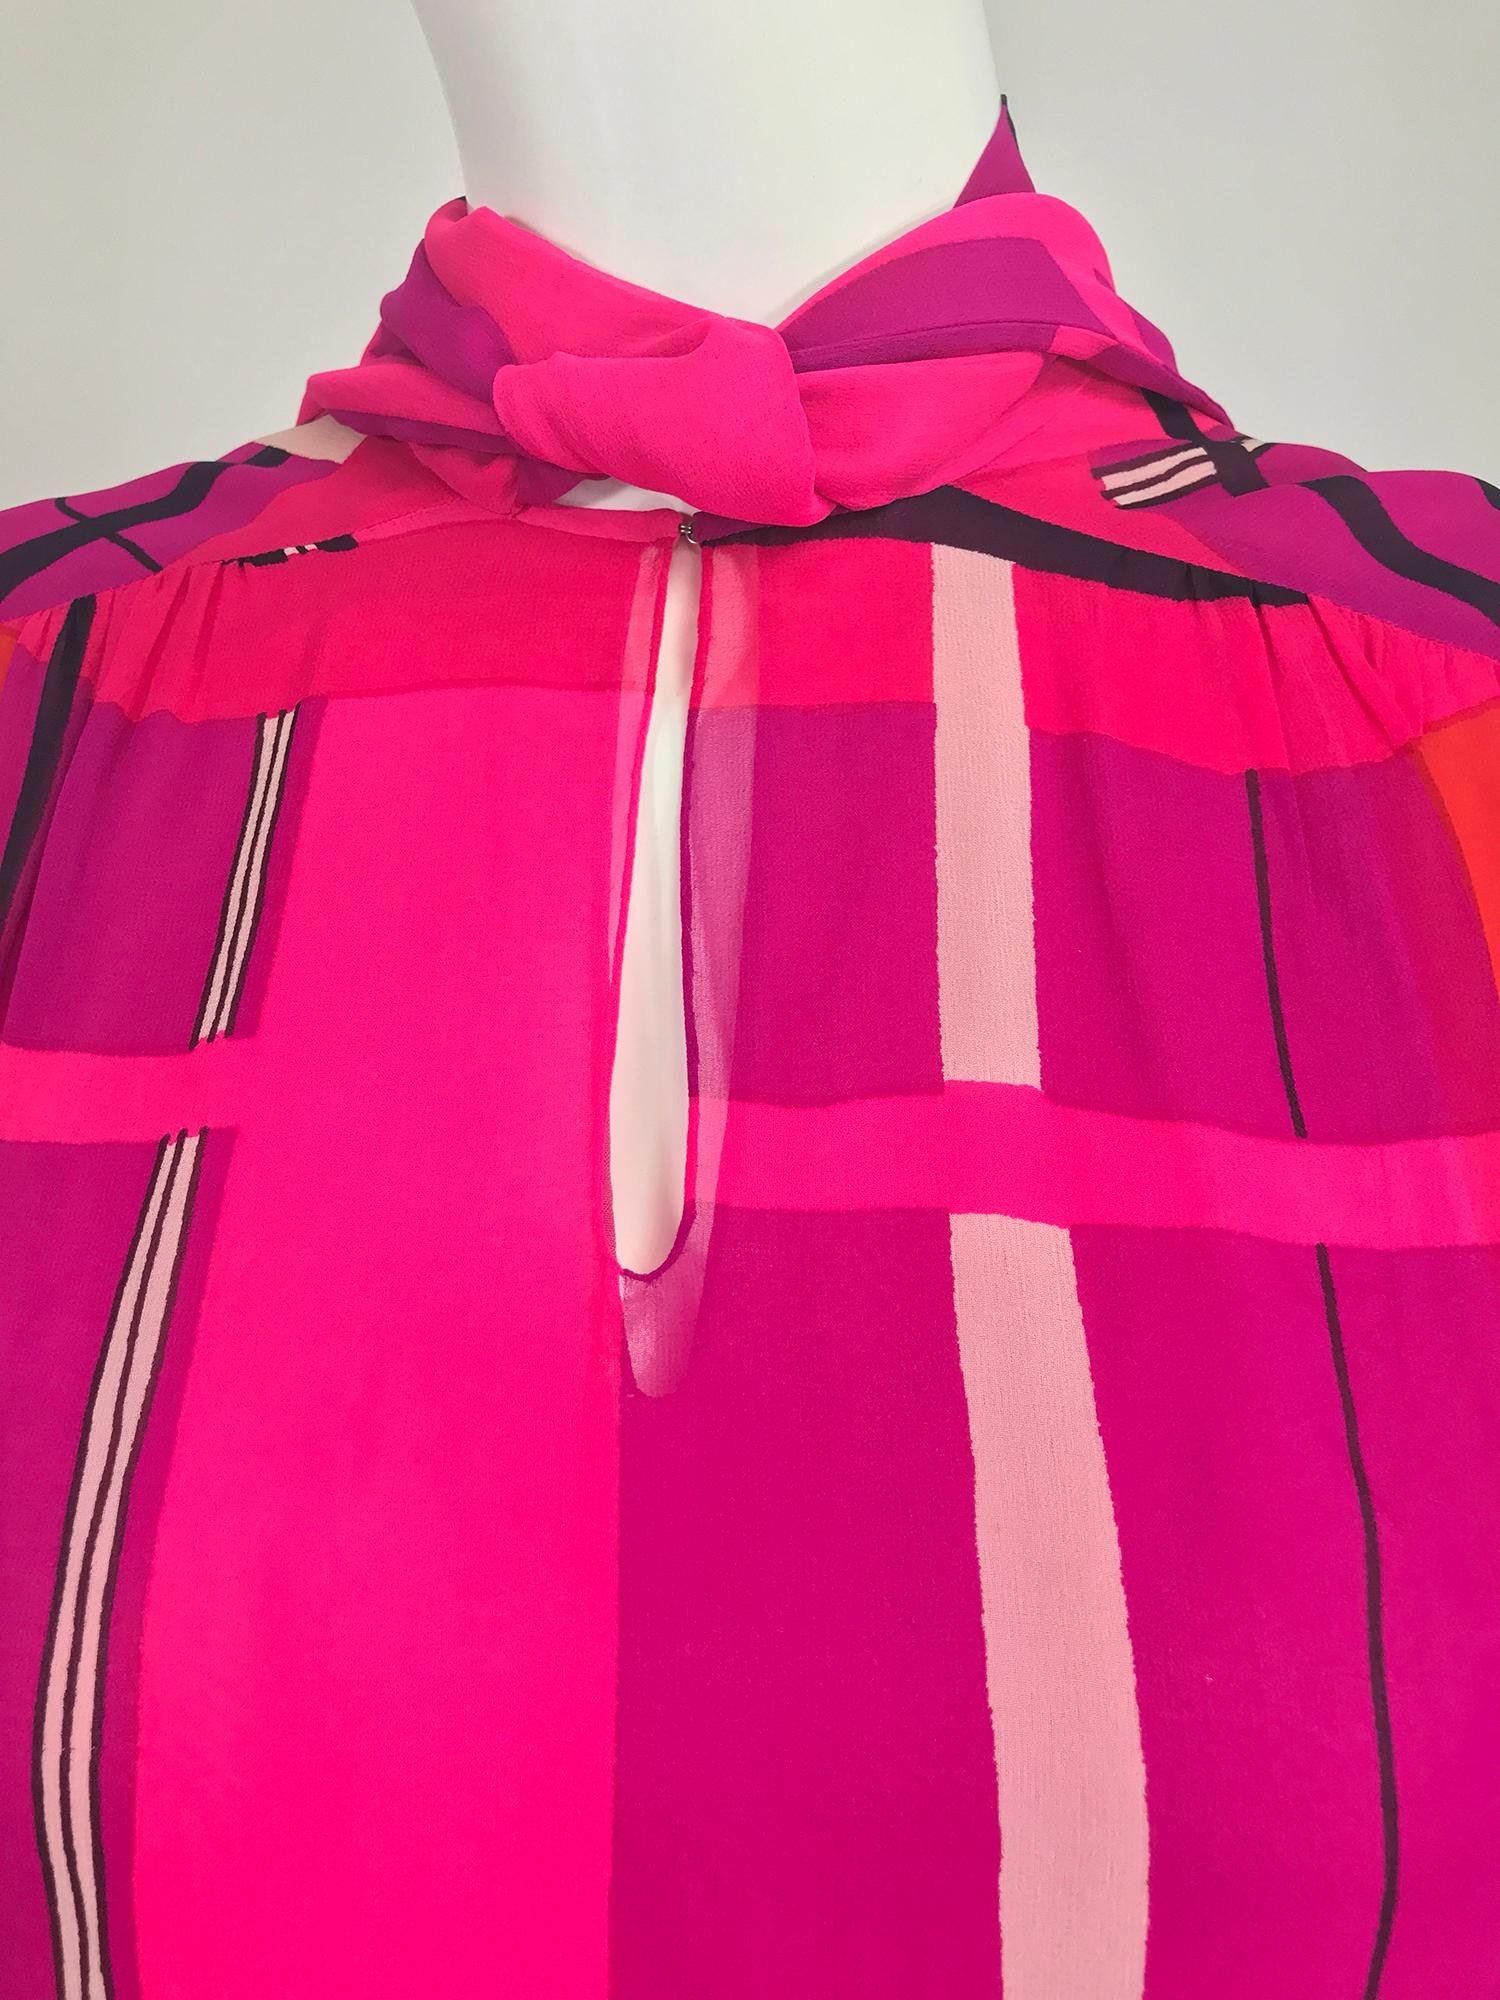 La Mendola Couture Hot Pink Silk Chiffon Modernist Print Dress 1970s 4